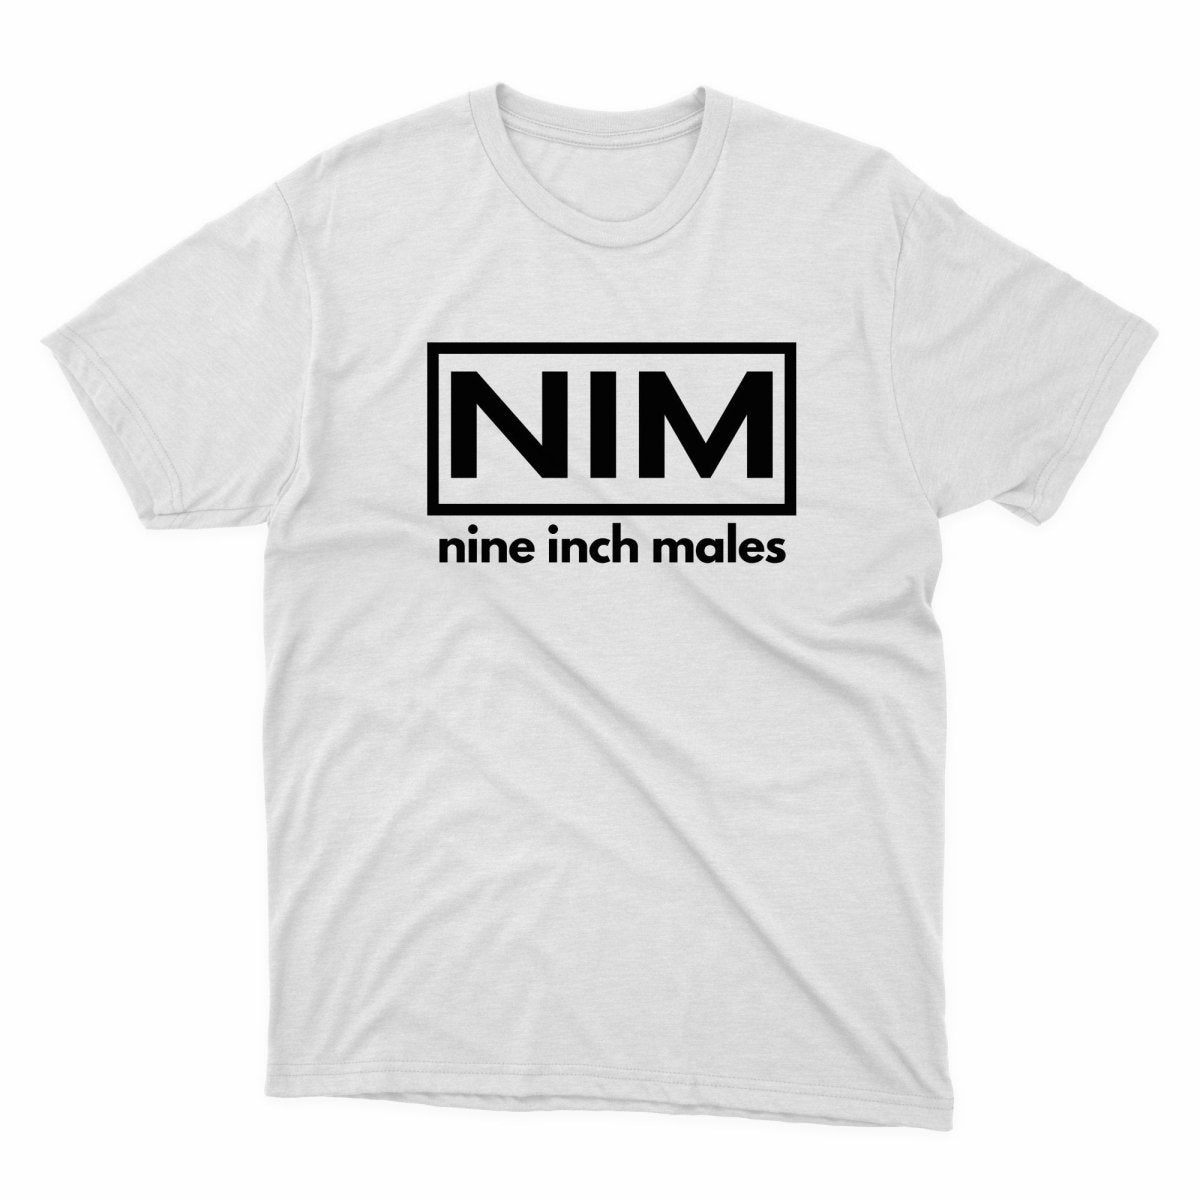 Nine Inch Males Shirt - stickerbullNine Inch Males ShirtShirtsPrintifystickerbull28521920511194617041WhiteSa white t - shirt with the words nim in black on it